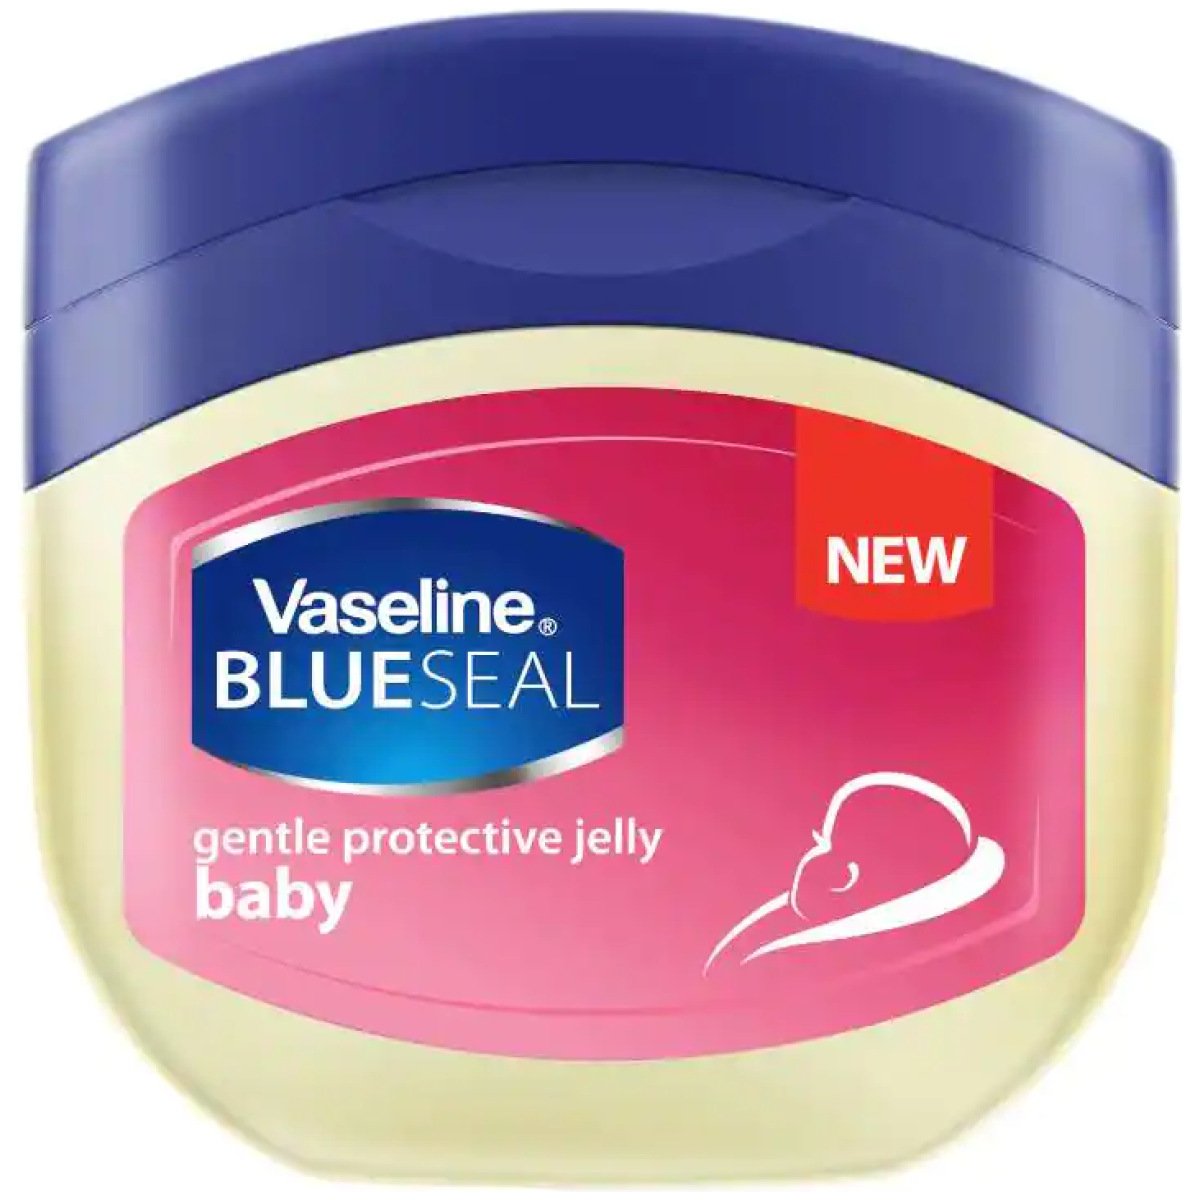 Vaseline Blueseal Petrolium Jelly Gentle Protective Baby 250Ml